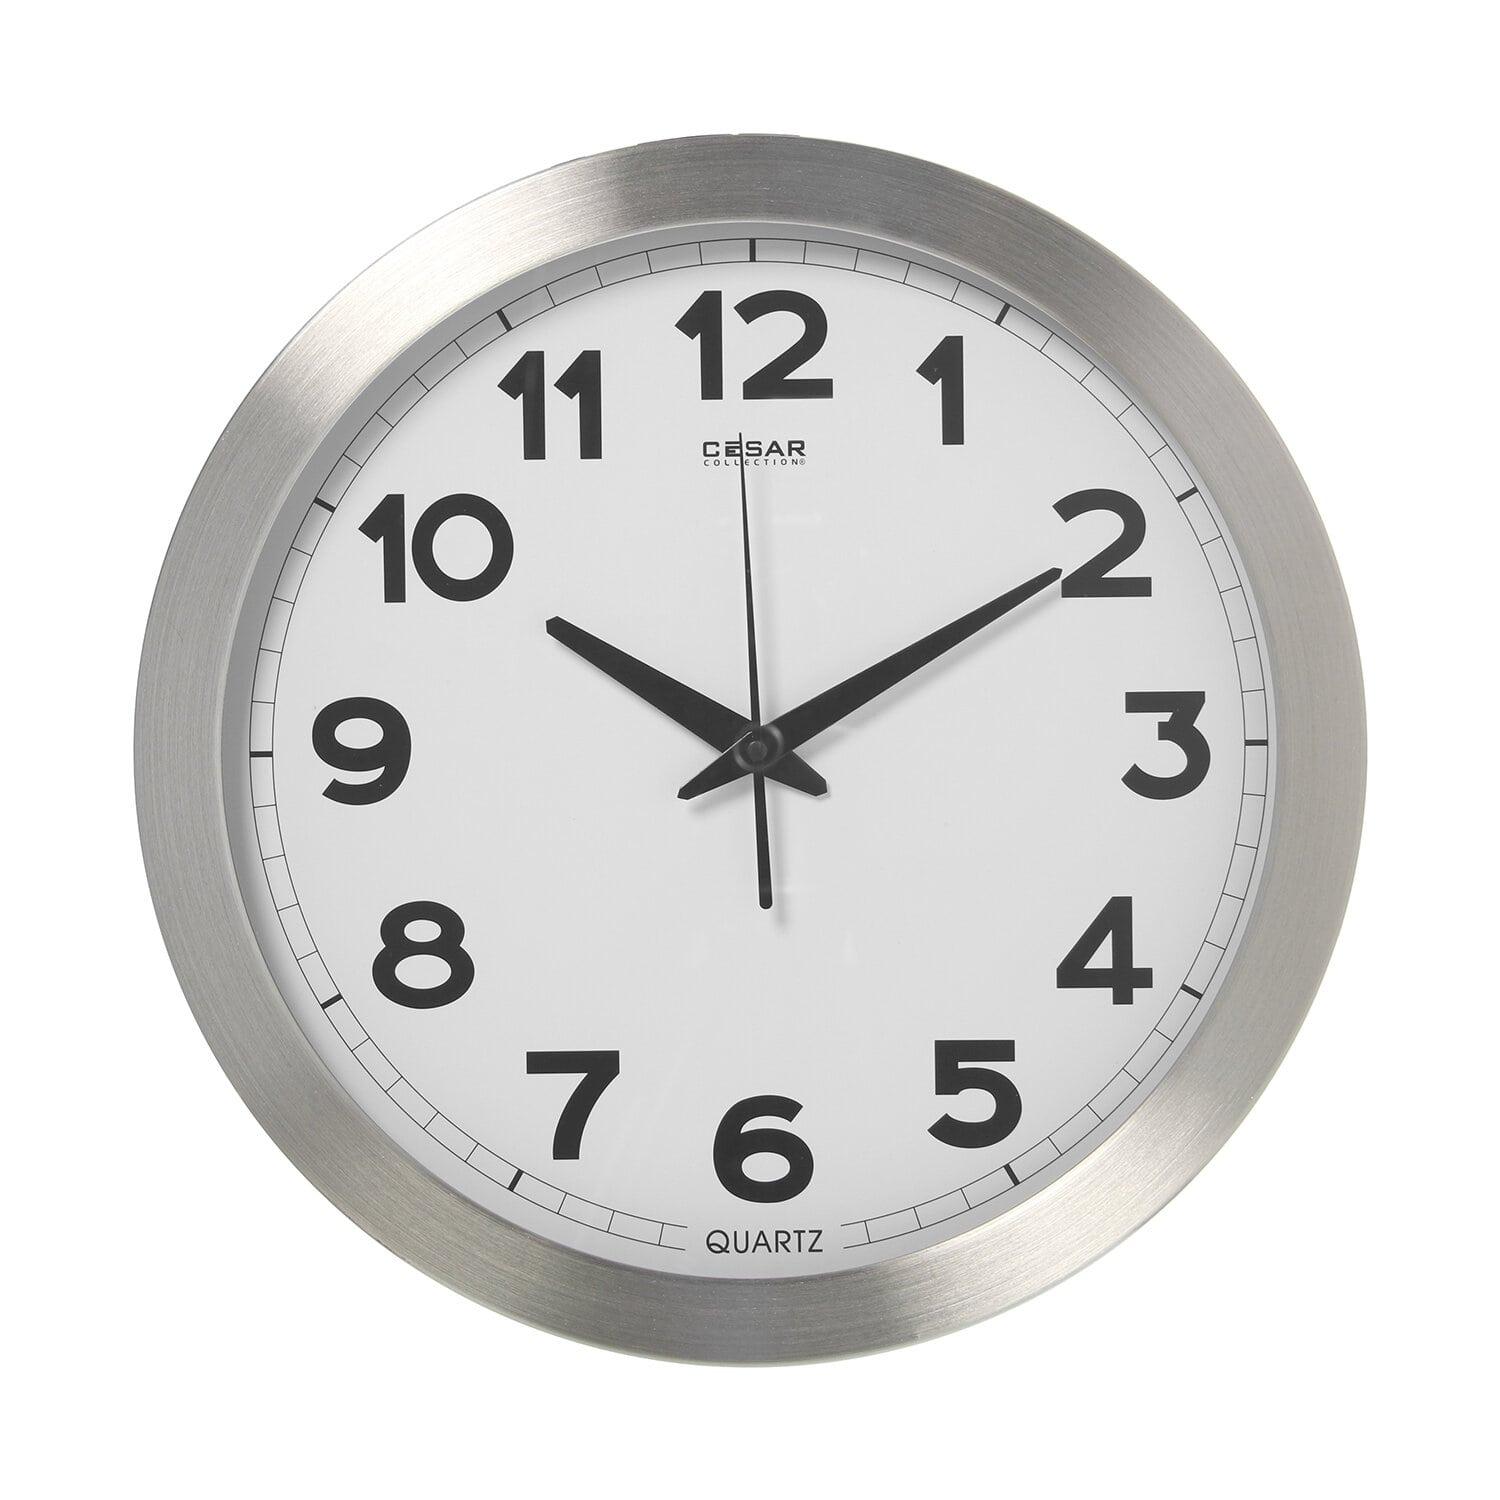 reloj-pared-aluminio-mate-esfera-blanca-numeracion-color-negro-50cms-diametro-segundero-continuo-esclusivas-camacho-86122-cesar-lomejorsg.jpg